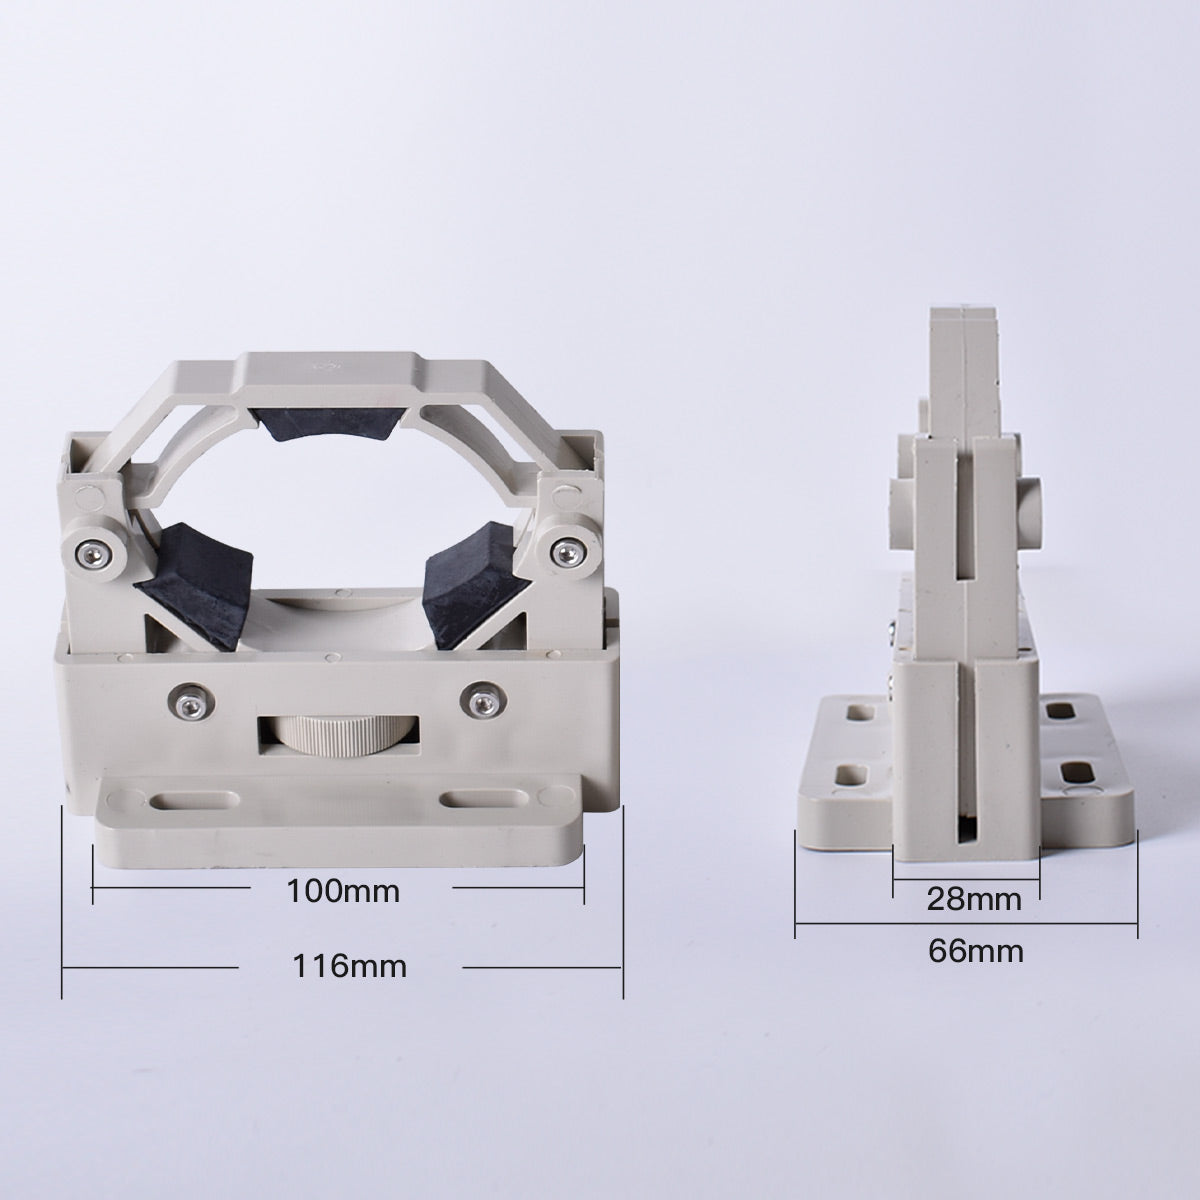 Startnow CO2 Laser Tube Holder Mount Flexible Plastic Lamp Support D50-80 Adjustable Bracket Base For Laser Cutter Machine Parts